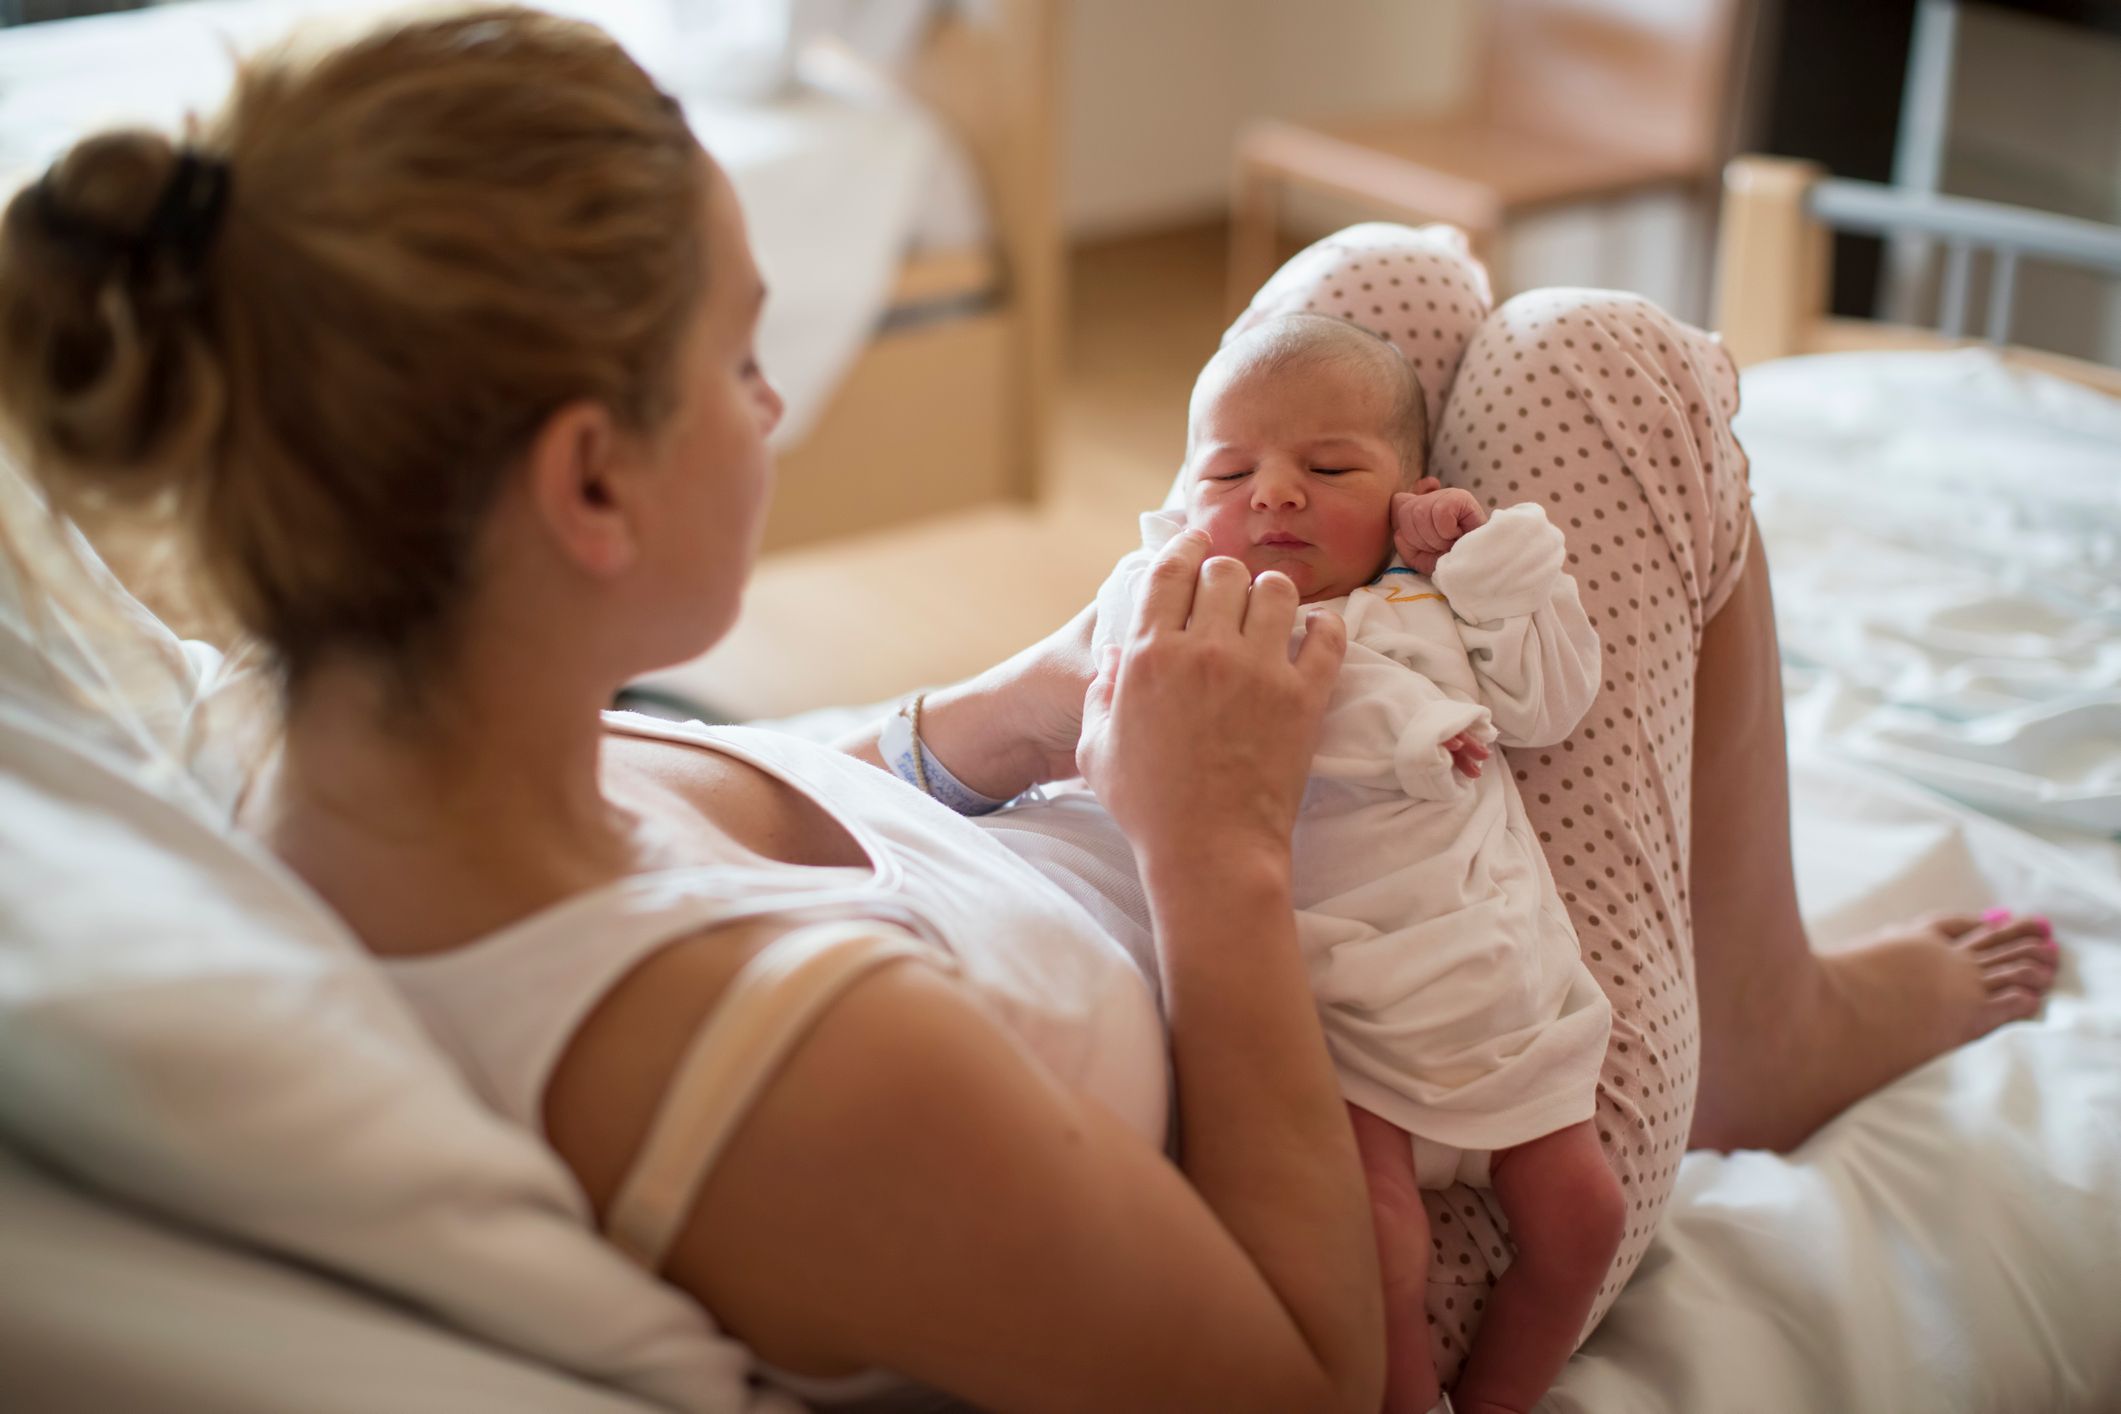 A mom holding her newborn baby. | Source: Shutterstock